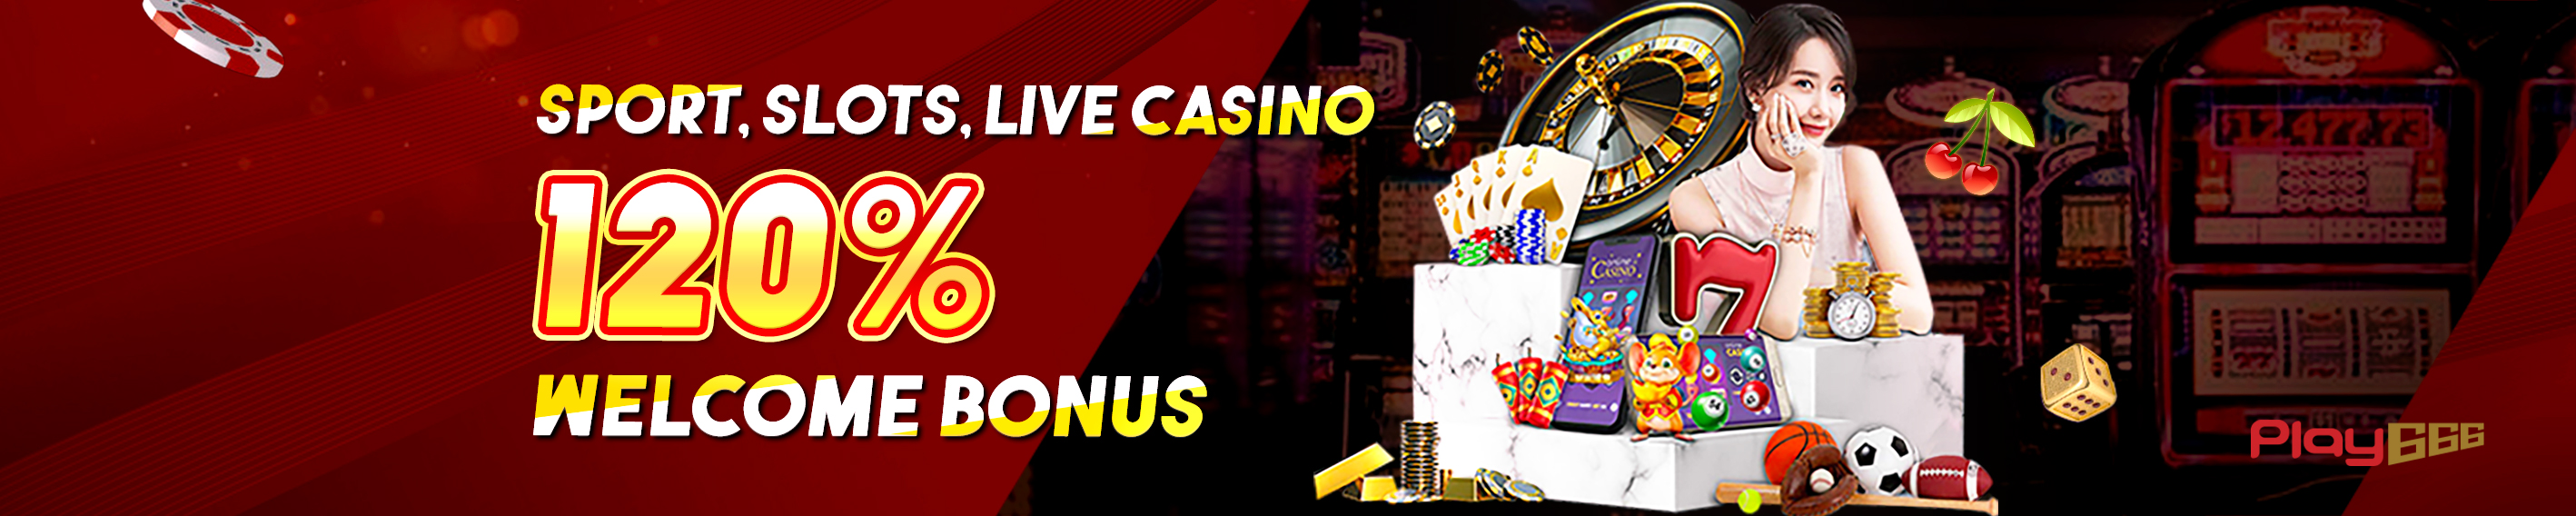 Casino Malaysia Welcome Bonus